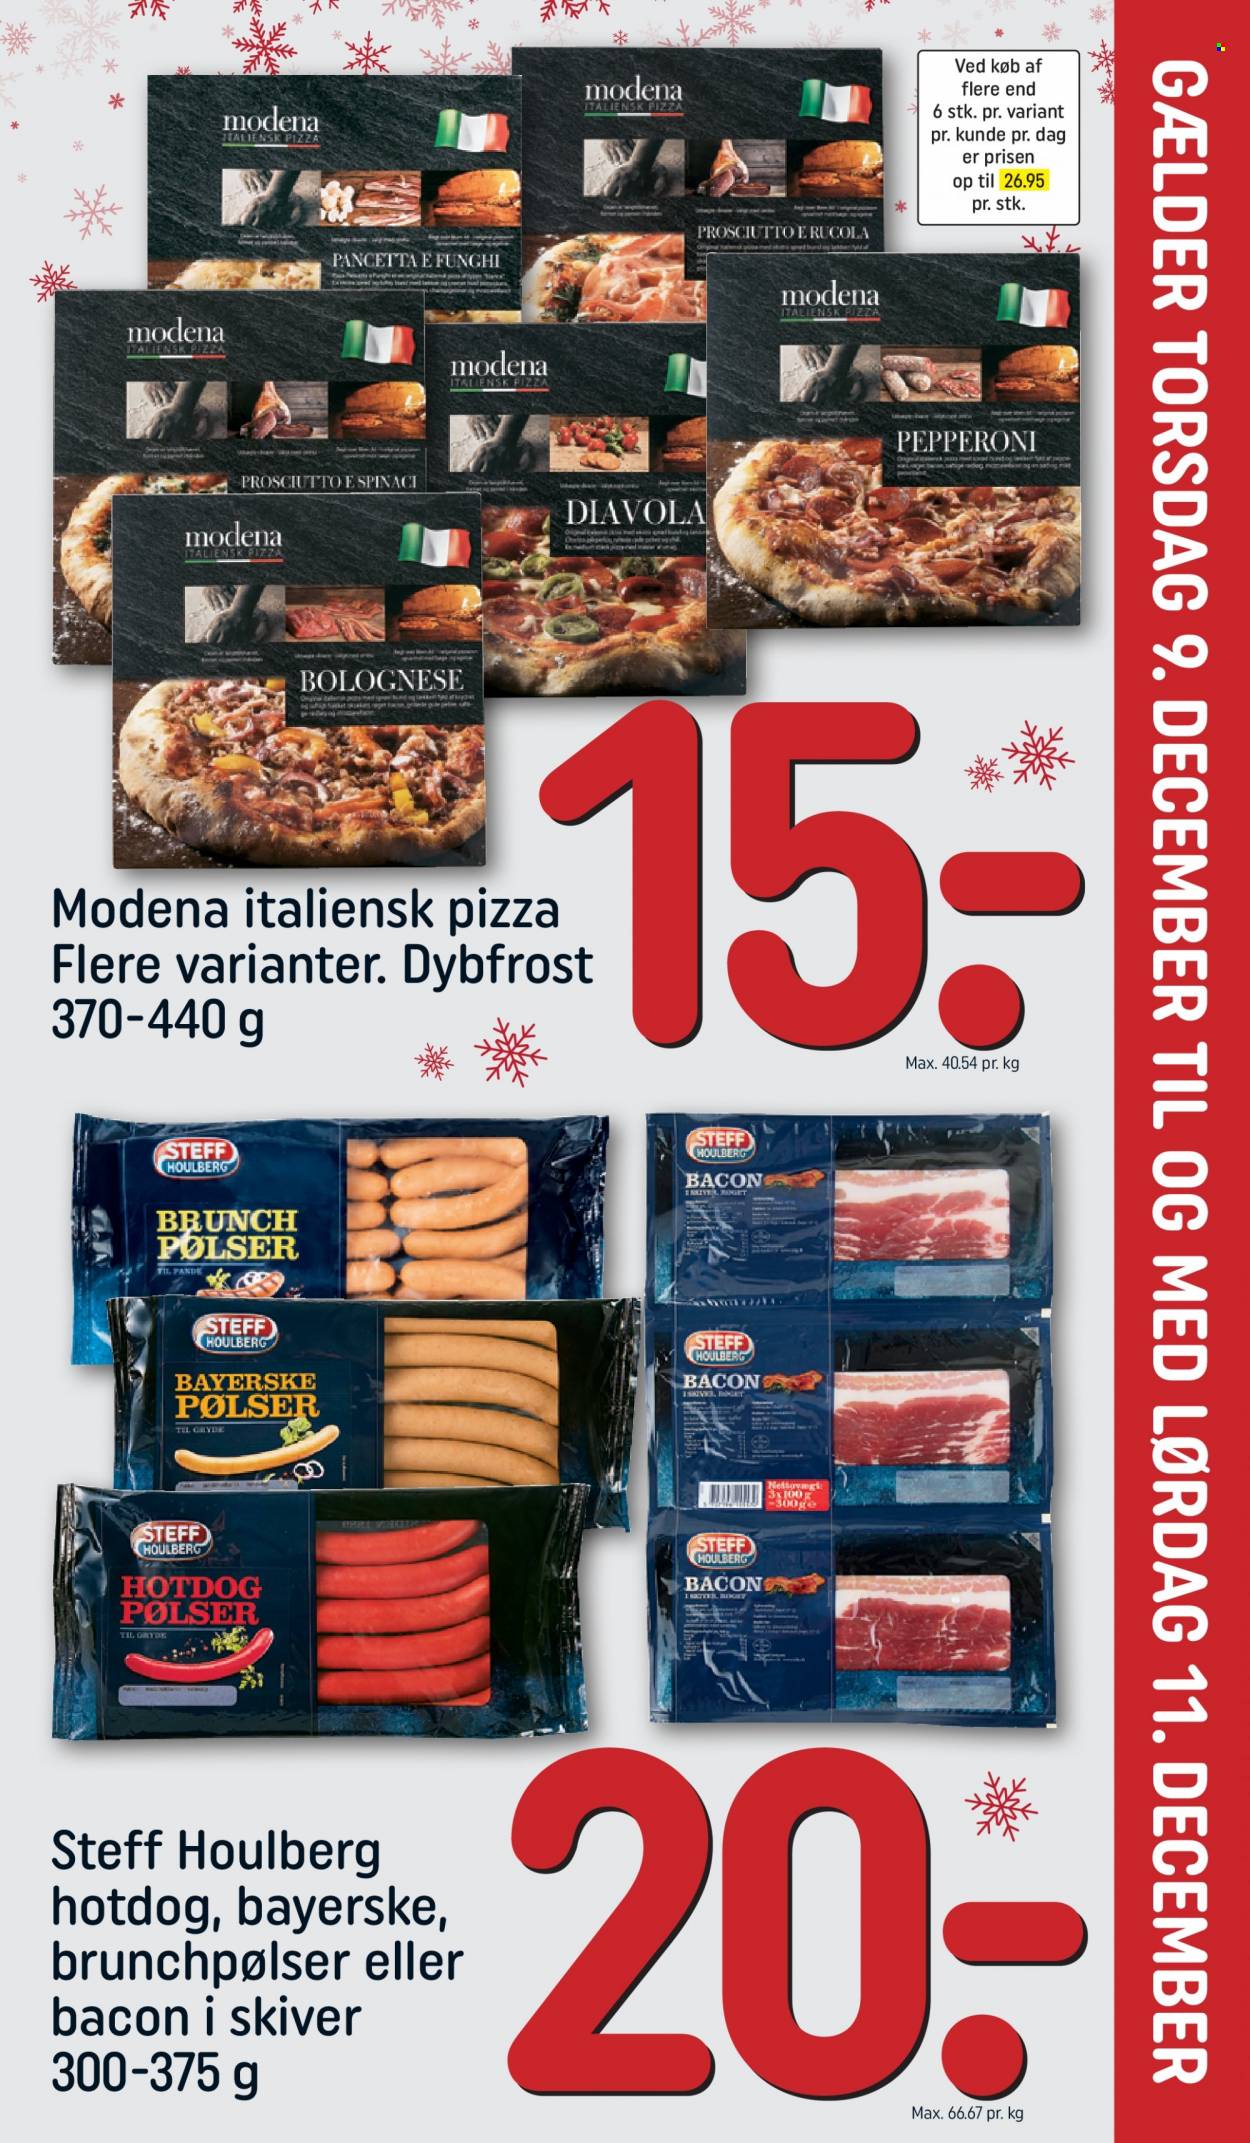 thumbnail - Rema 1000 tilbud  - 9.12.2021 - 11.12.2021 - tilbudsprodukter - rucola, hot dog, pizza, Steff Houlberg, bacon, Pancetta, prosciutto, hotdog pølser, pølser. Side 1.